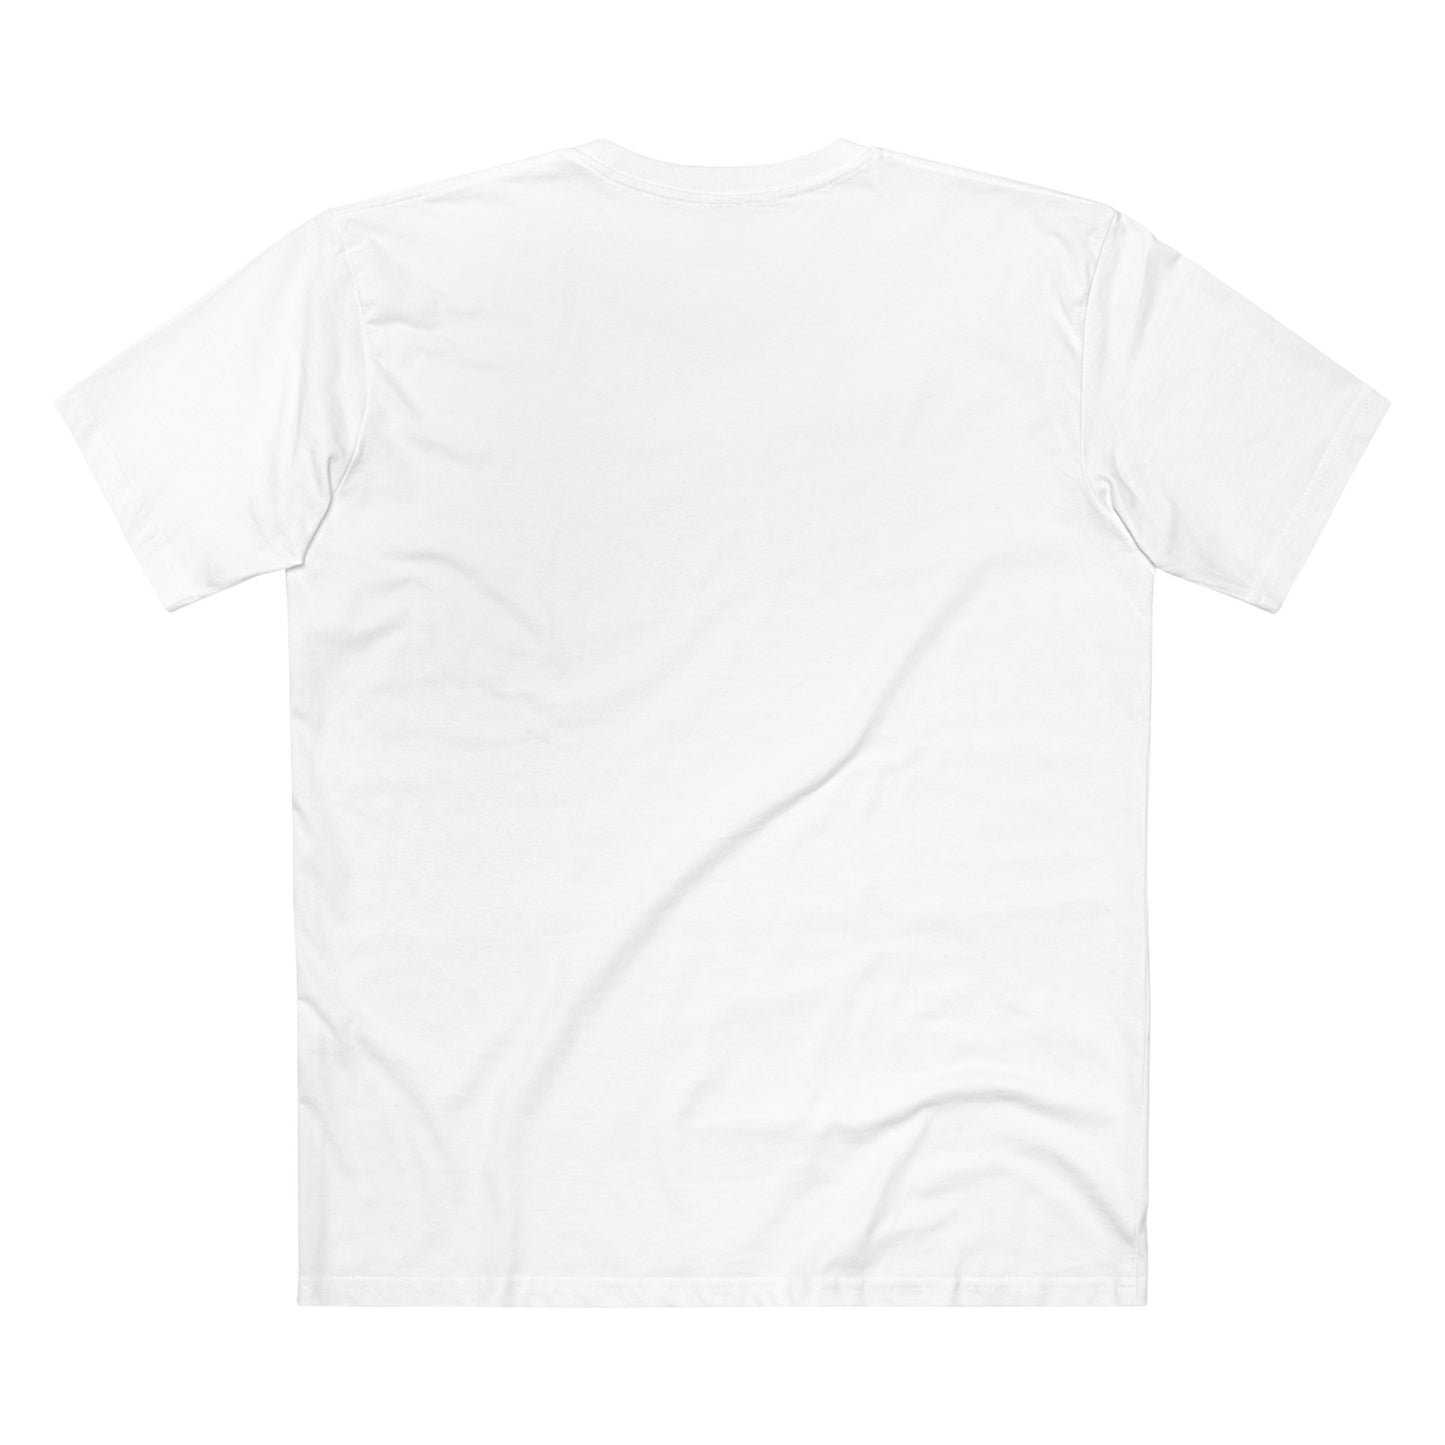 Denali National Park T-Shirt - Mountain Graphic